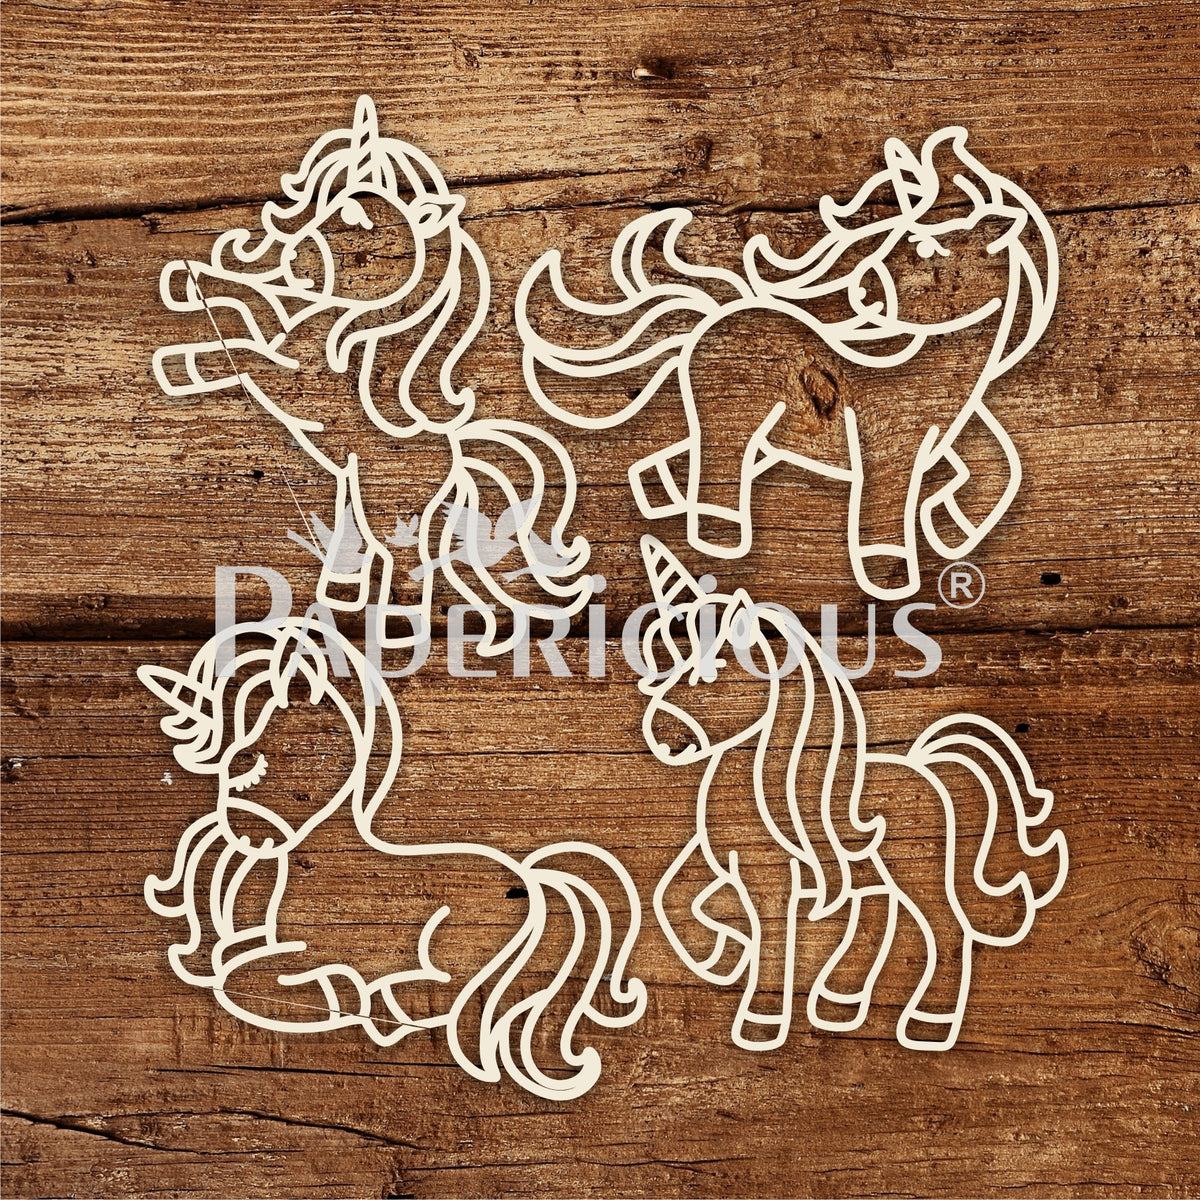 Cute Unicorn- 6x6 Inch Laser Cut Collage Chipboard